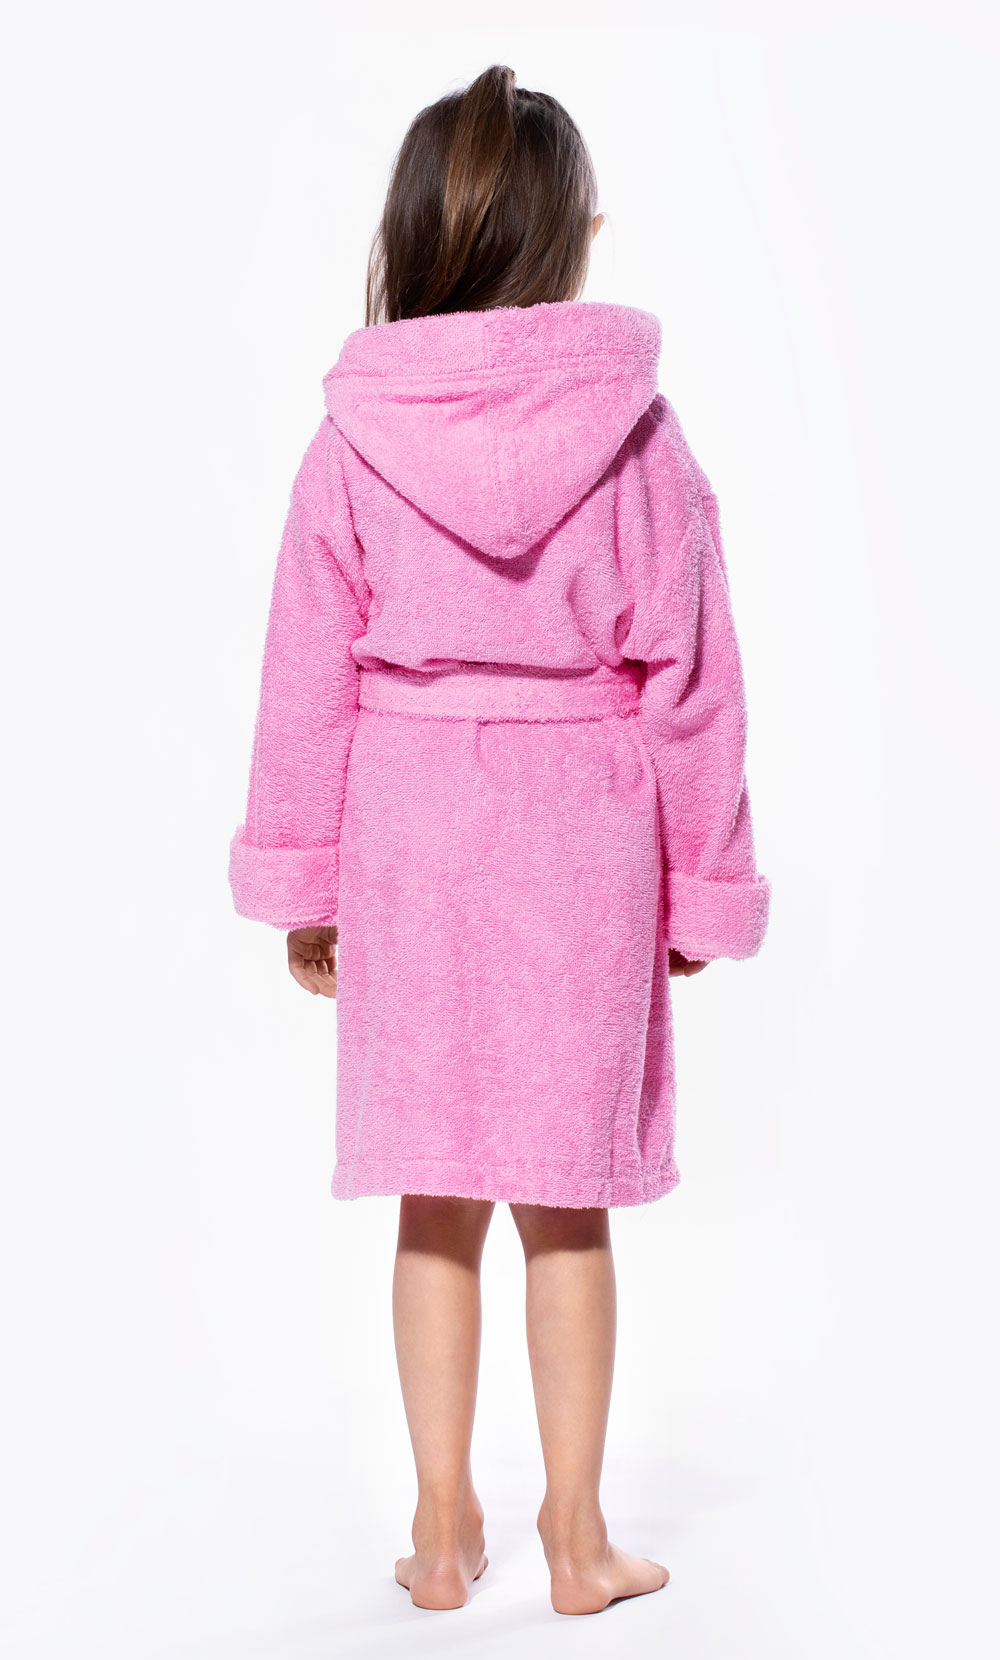 100% Turkish Cotton Pink Hooded Terry Kid's Bathrobe-Robemart.com